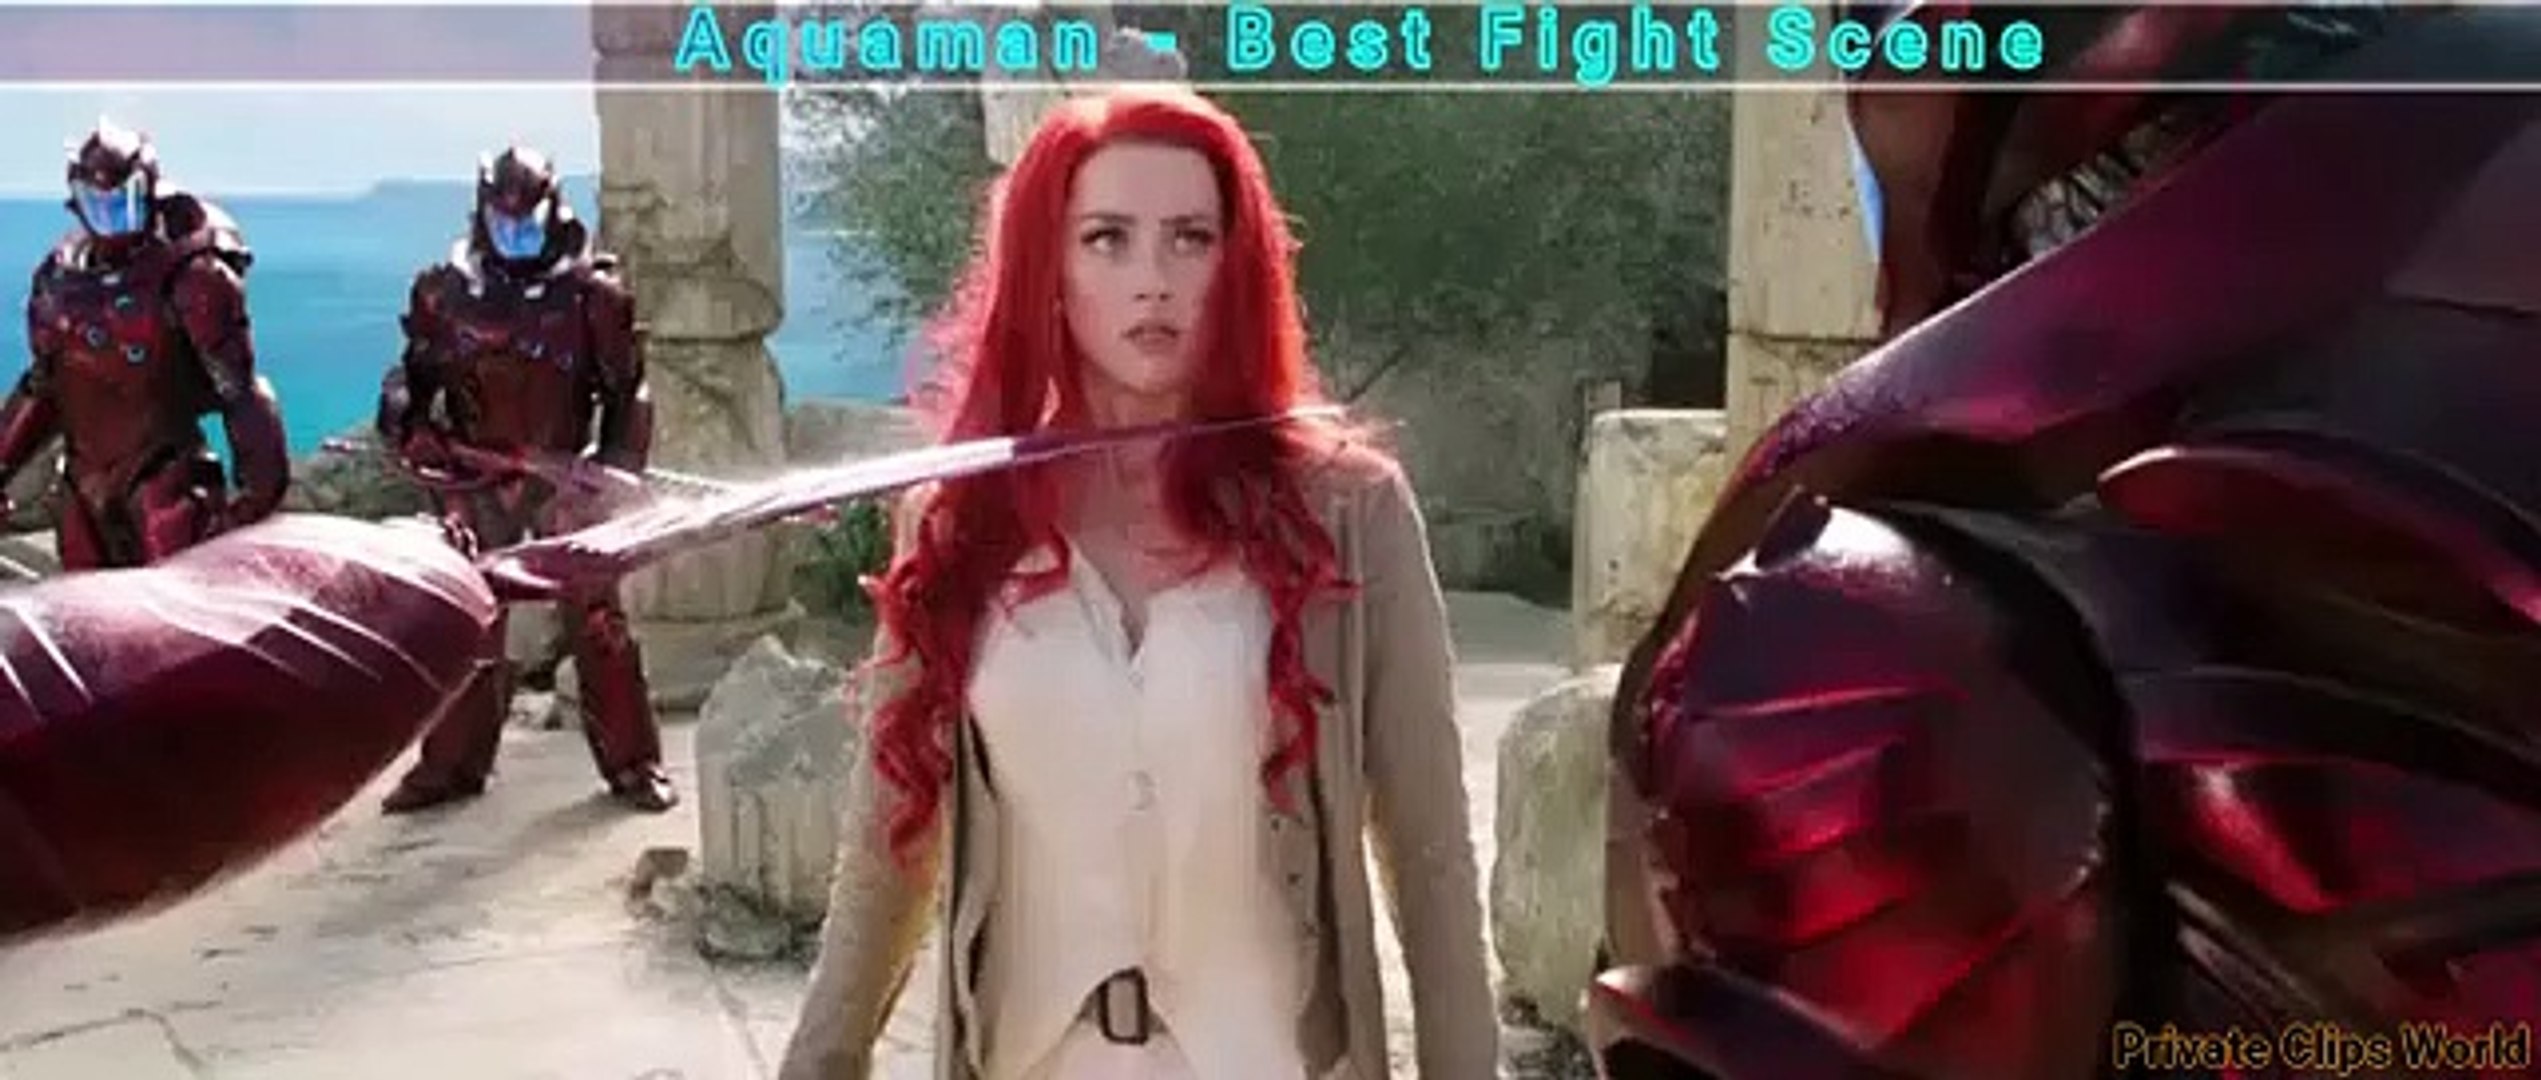 Aquamam best fight scene || Full Fight - video Dailymotion